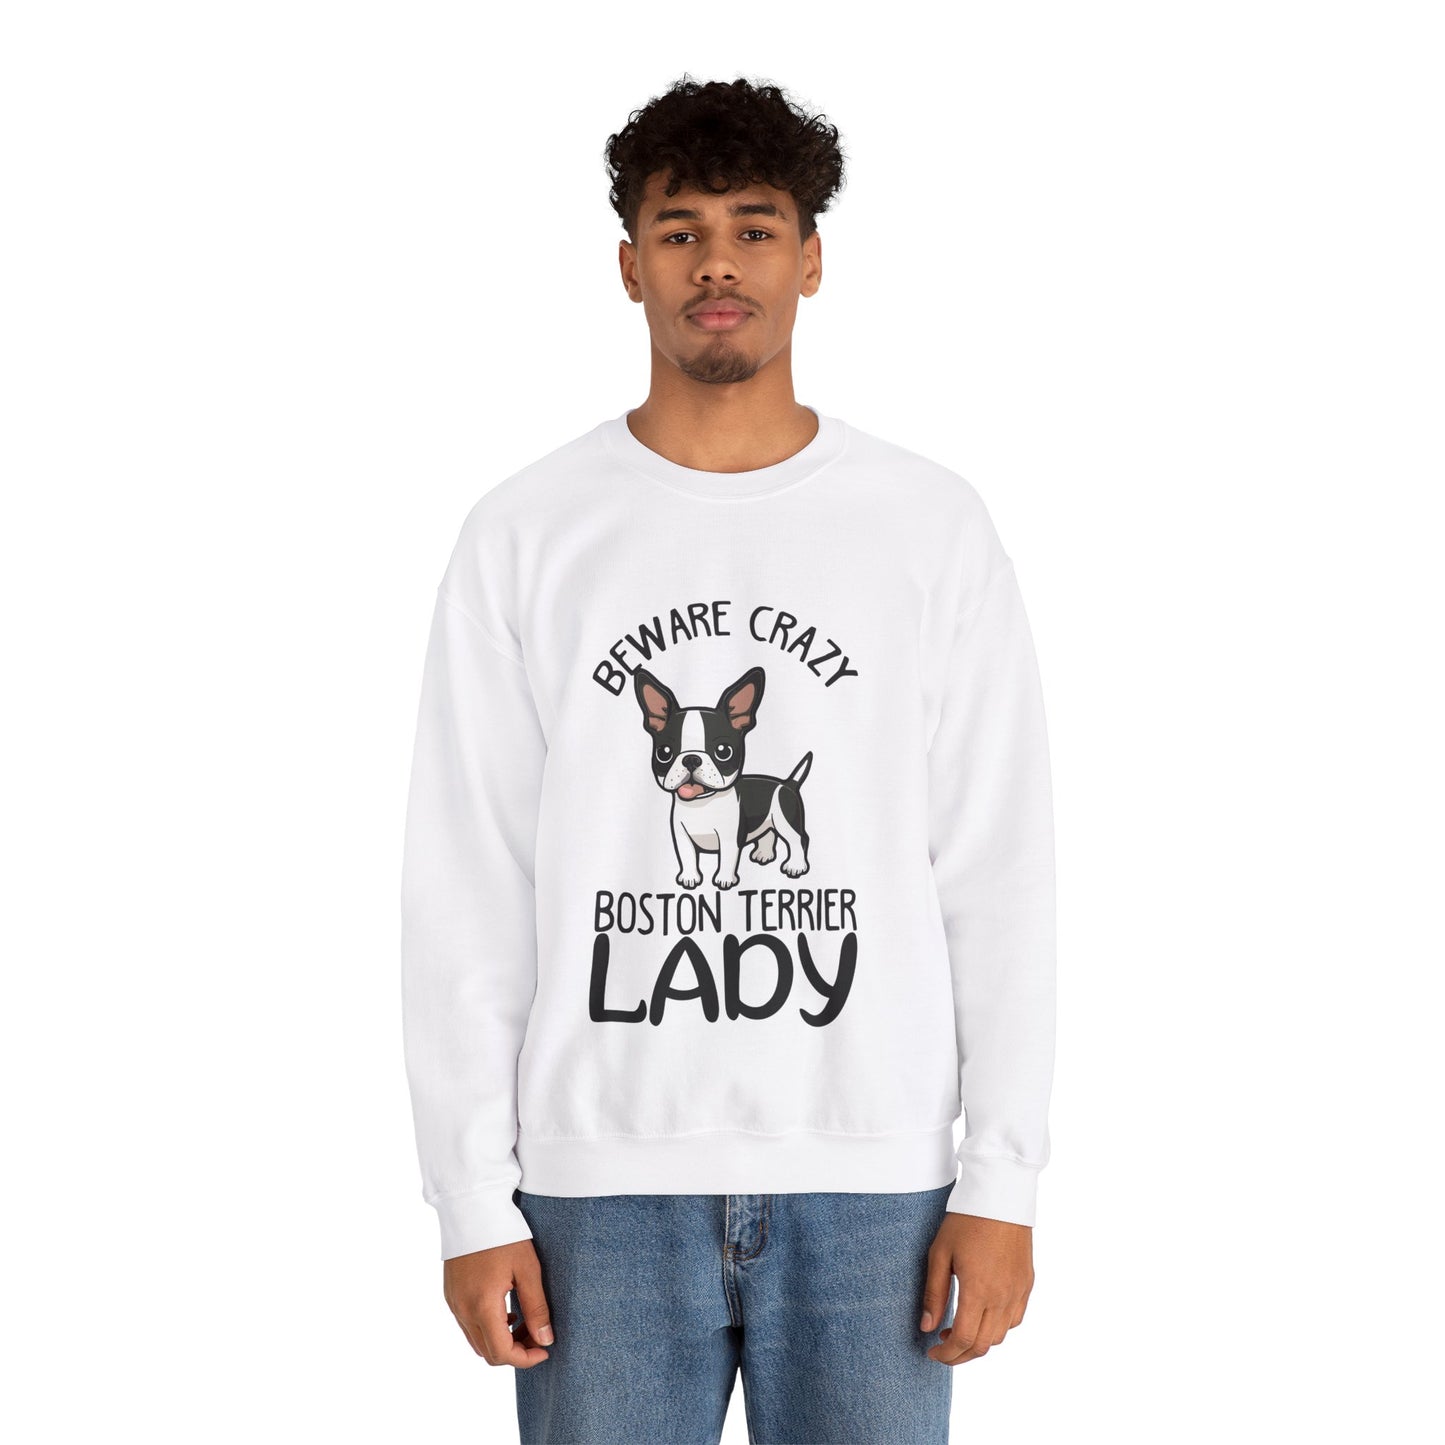 Jax - Unisex Sweatshirt for Boston Terrier lovers